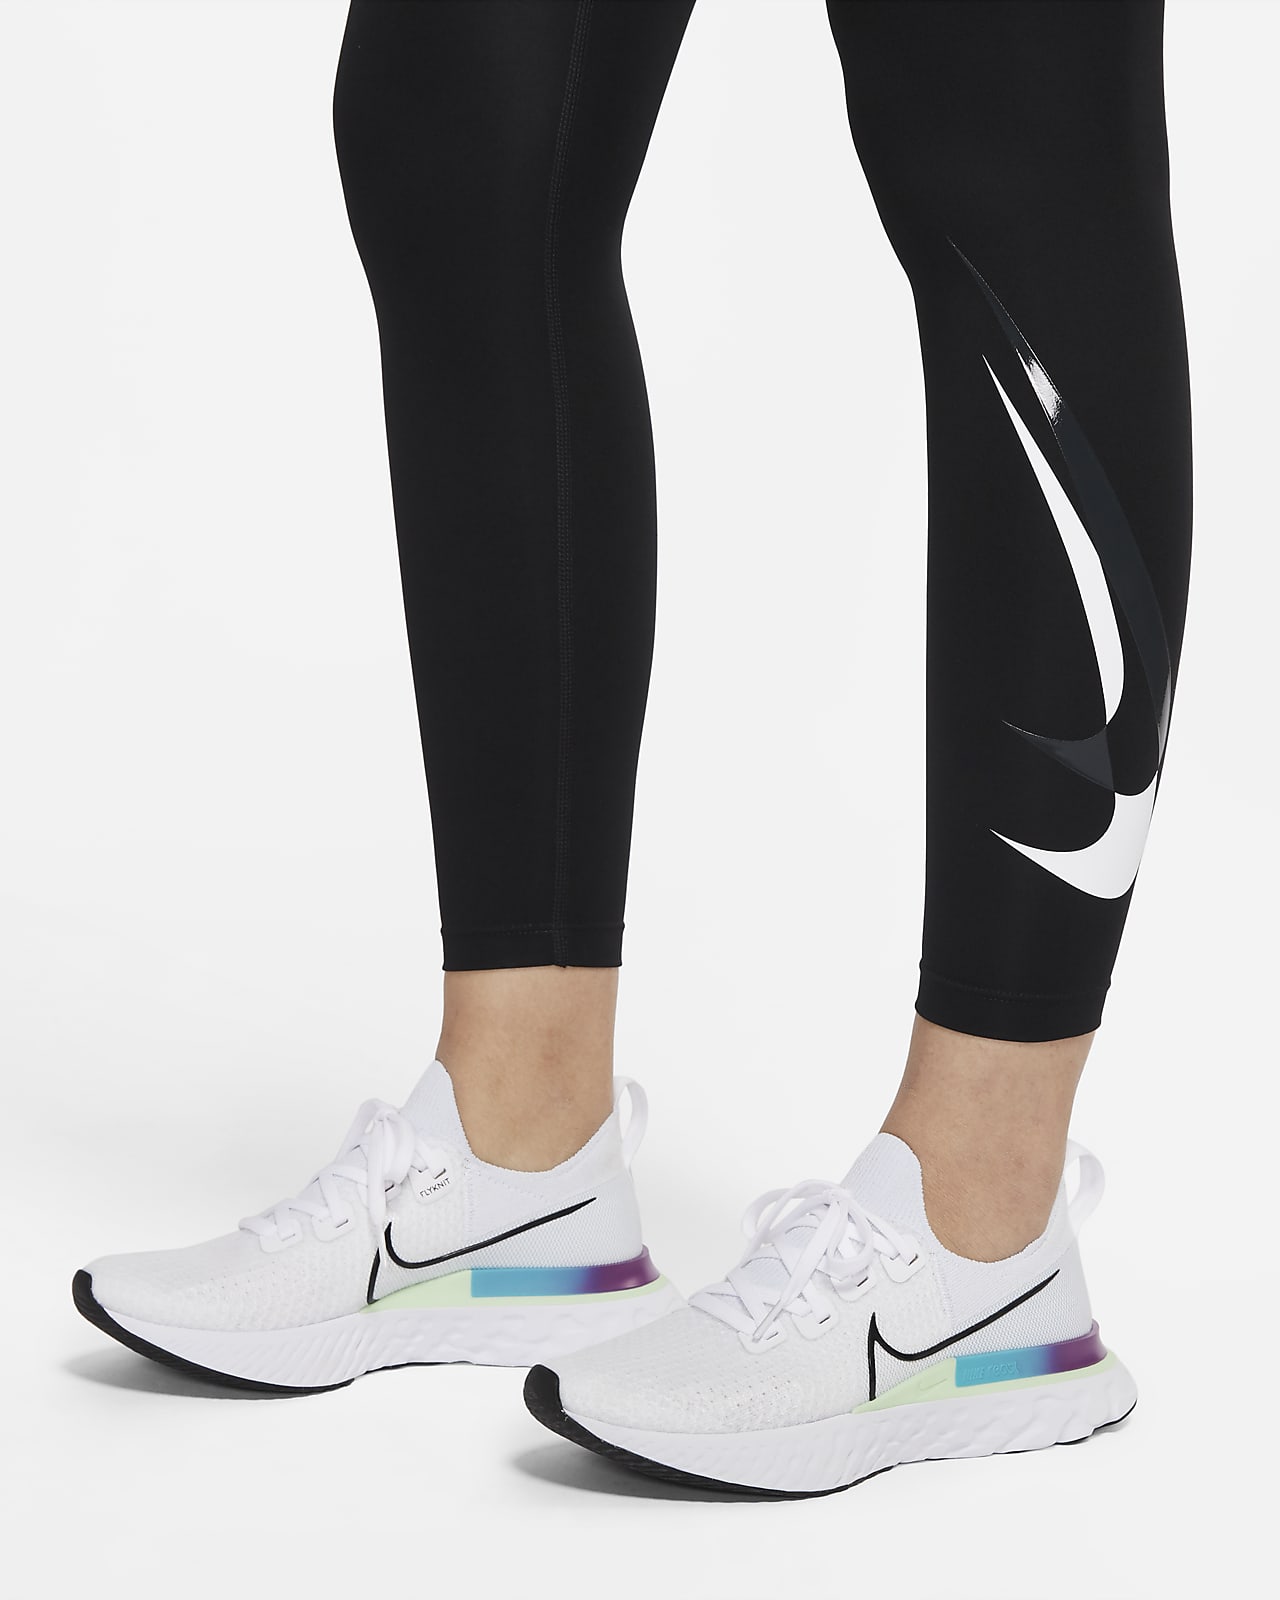 Nike Sportswear Women's Mid-Rise Swoosh Leggings Black / White